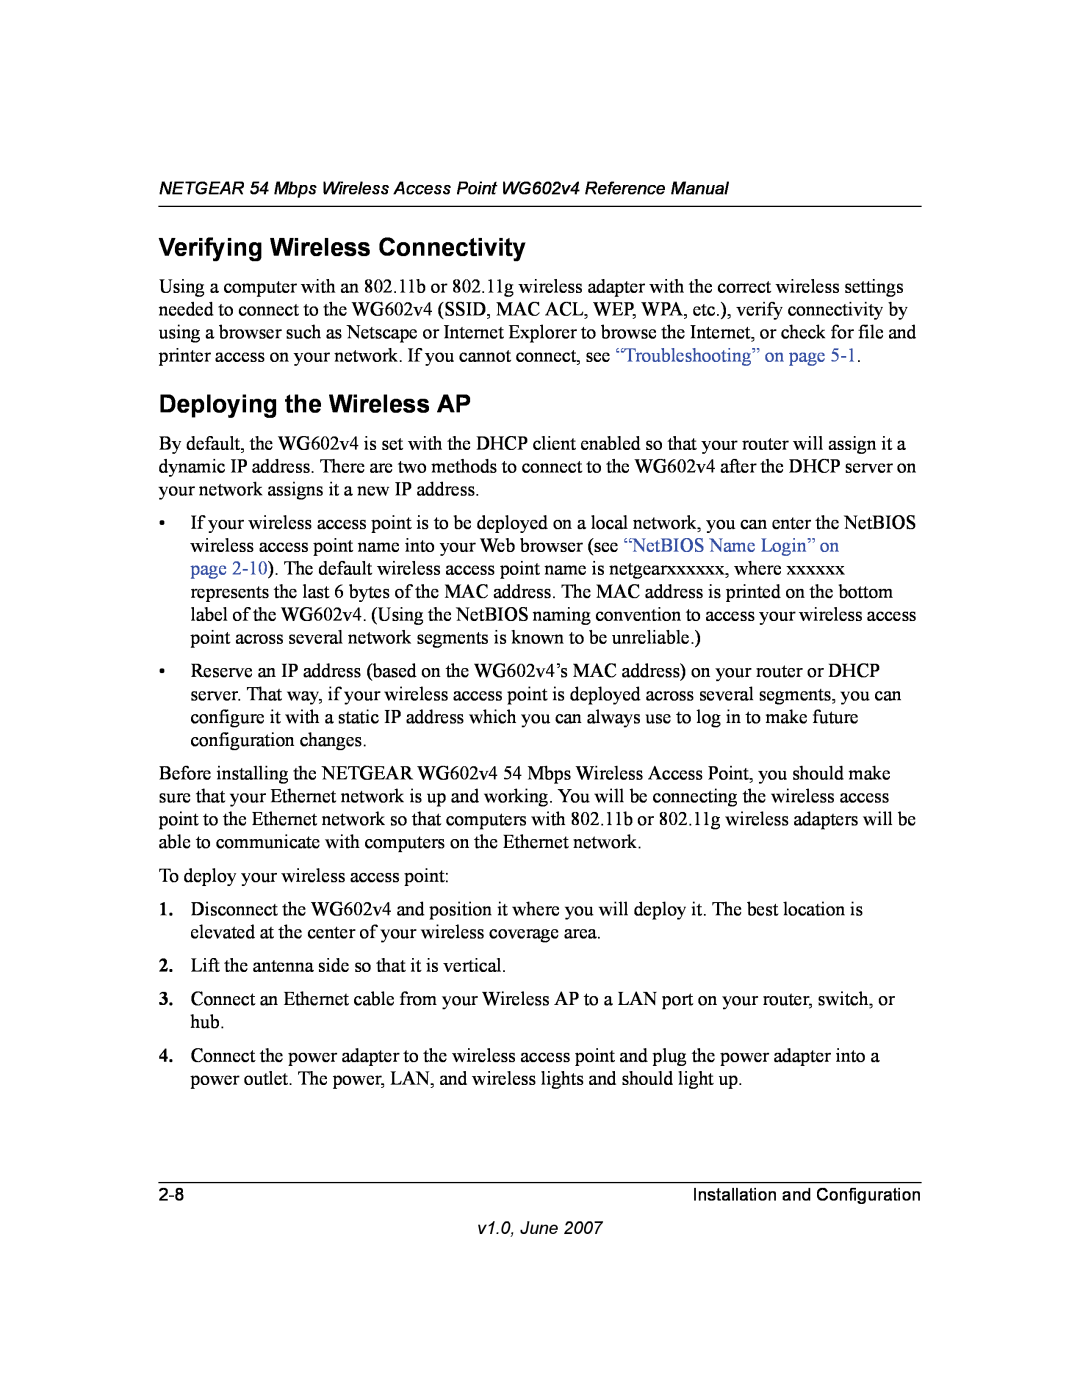 NETGEAR WG602V4 manual Verifying Wireless Connectivity, Deploying the Wireless AP 